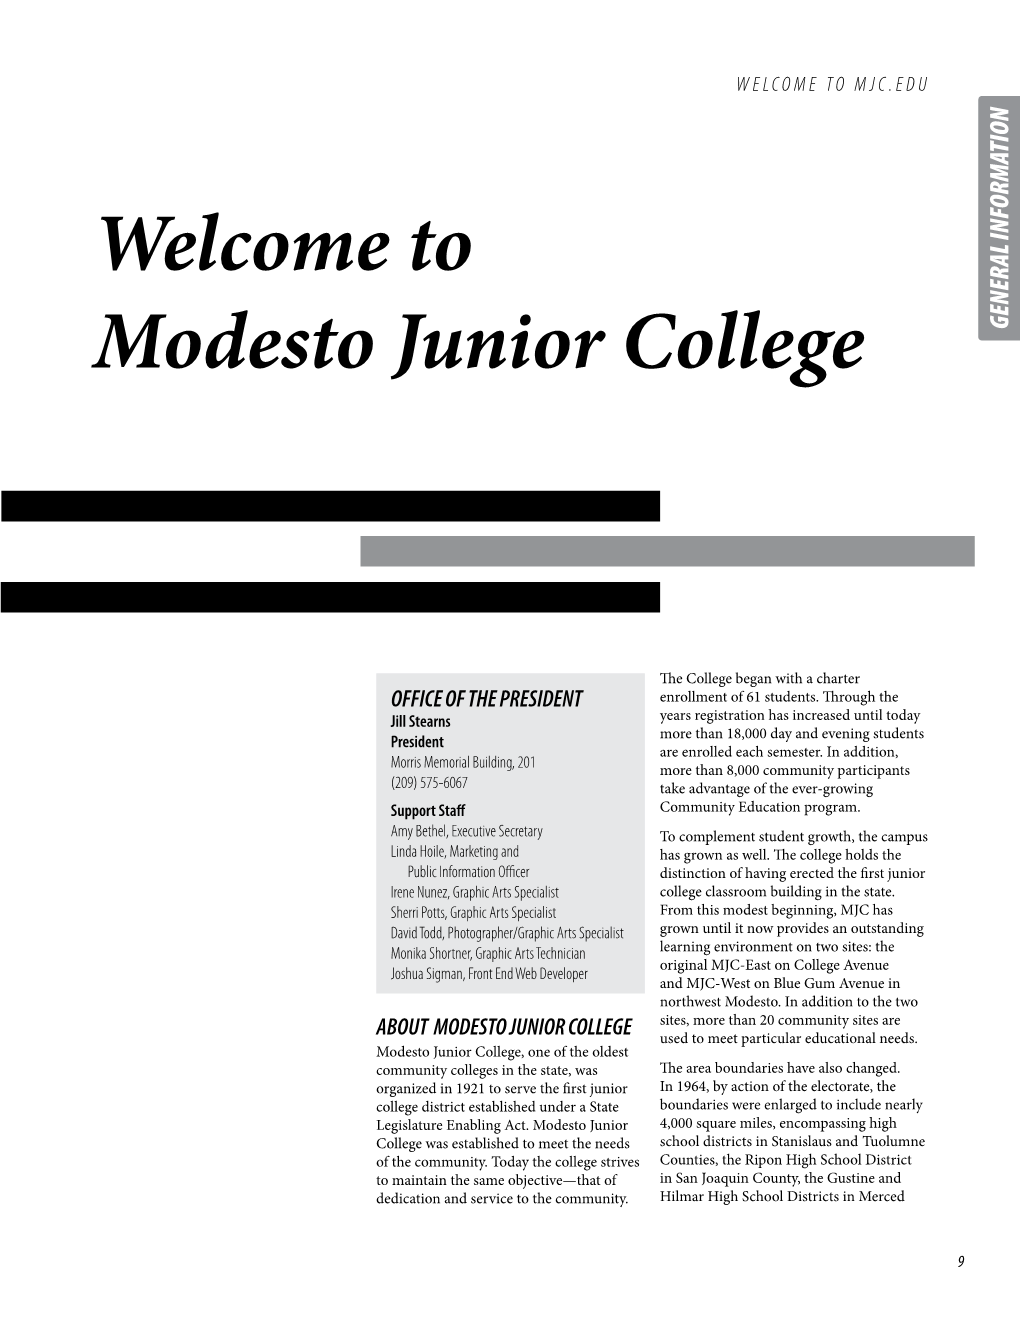 Welcome to Modesto Junior College GENERAL INFORMATION